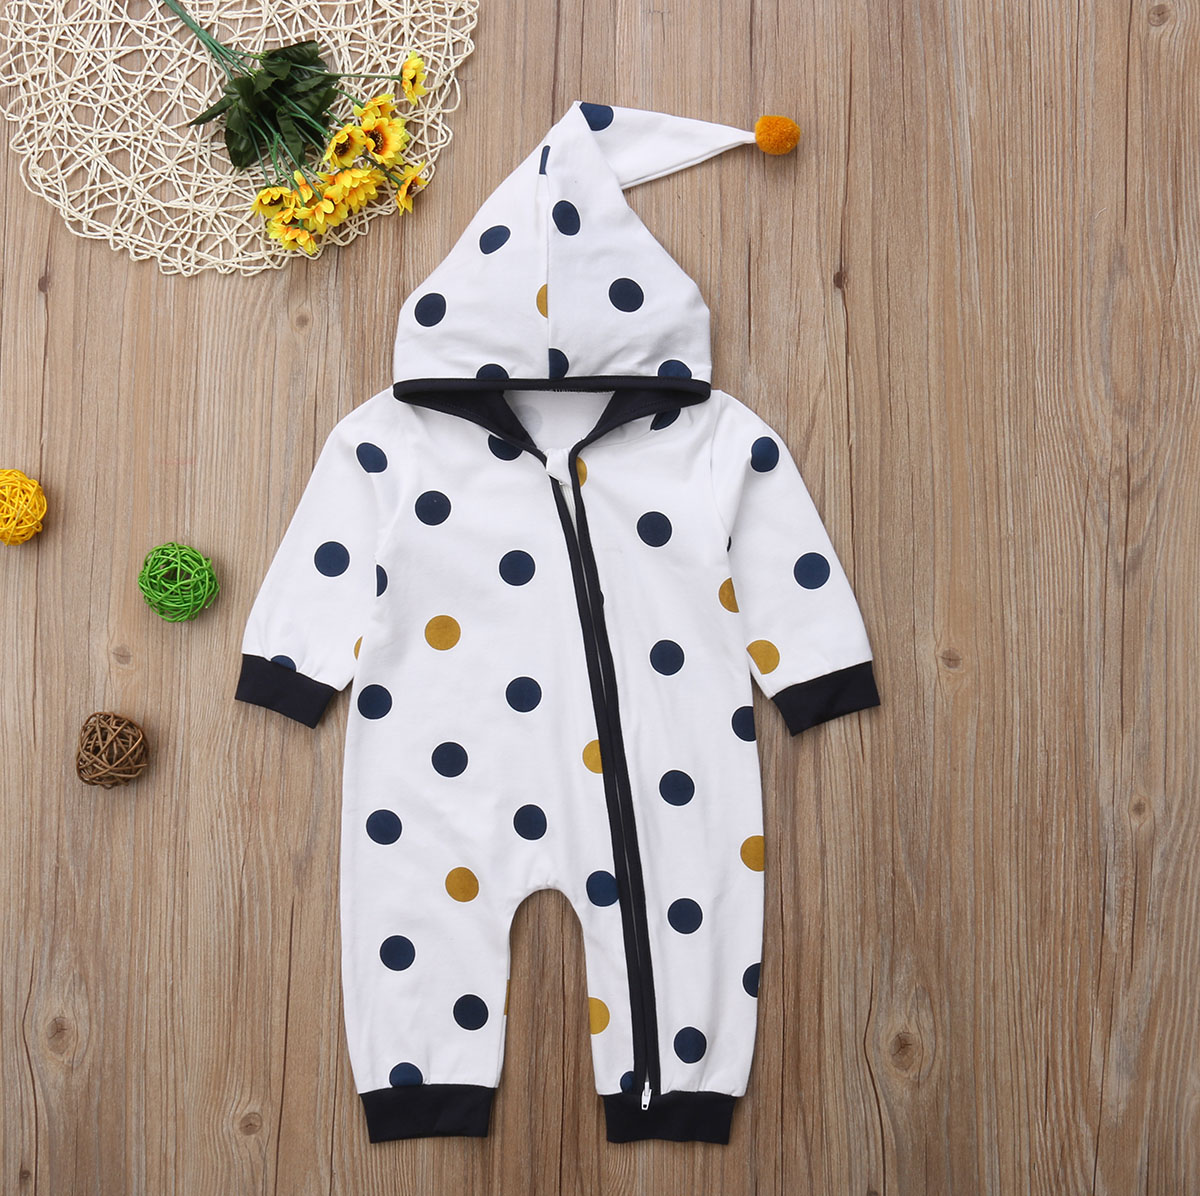 2018 Brand New Newborn Infant Baby Girls Boys Autumn Winter Romper Long Sleeve Cuspate Hooded Zipper Dot Jumpsuit Playsuit 0-24M